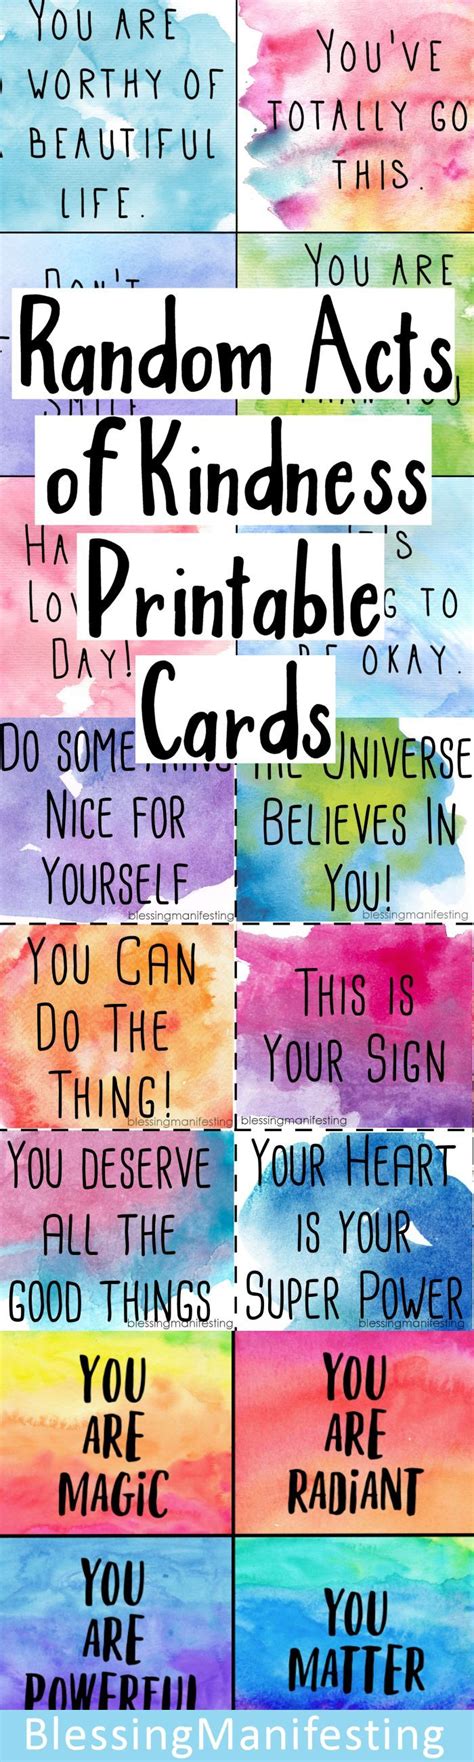 printable kindness cards